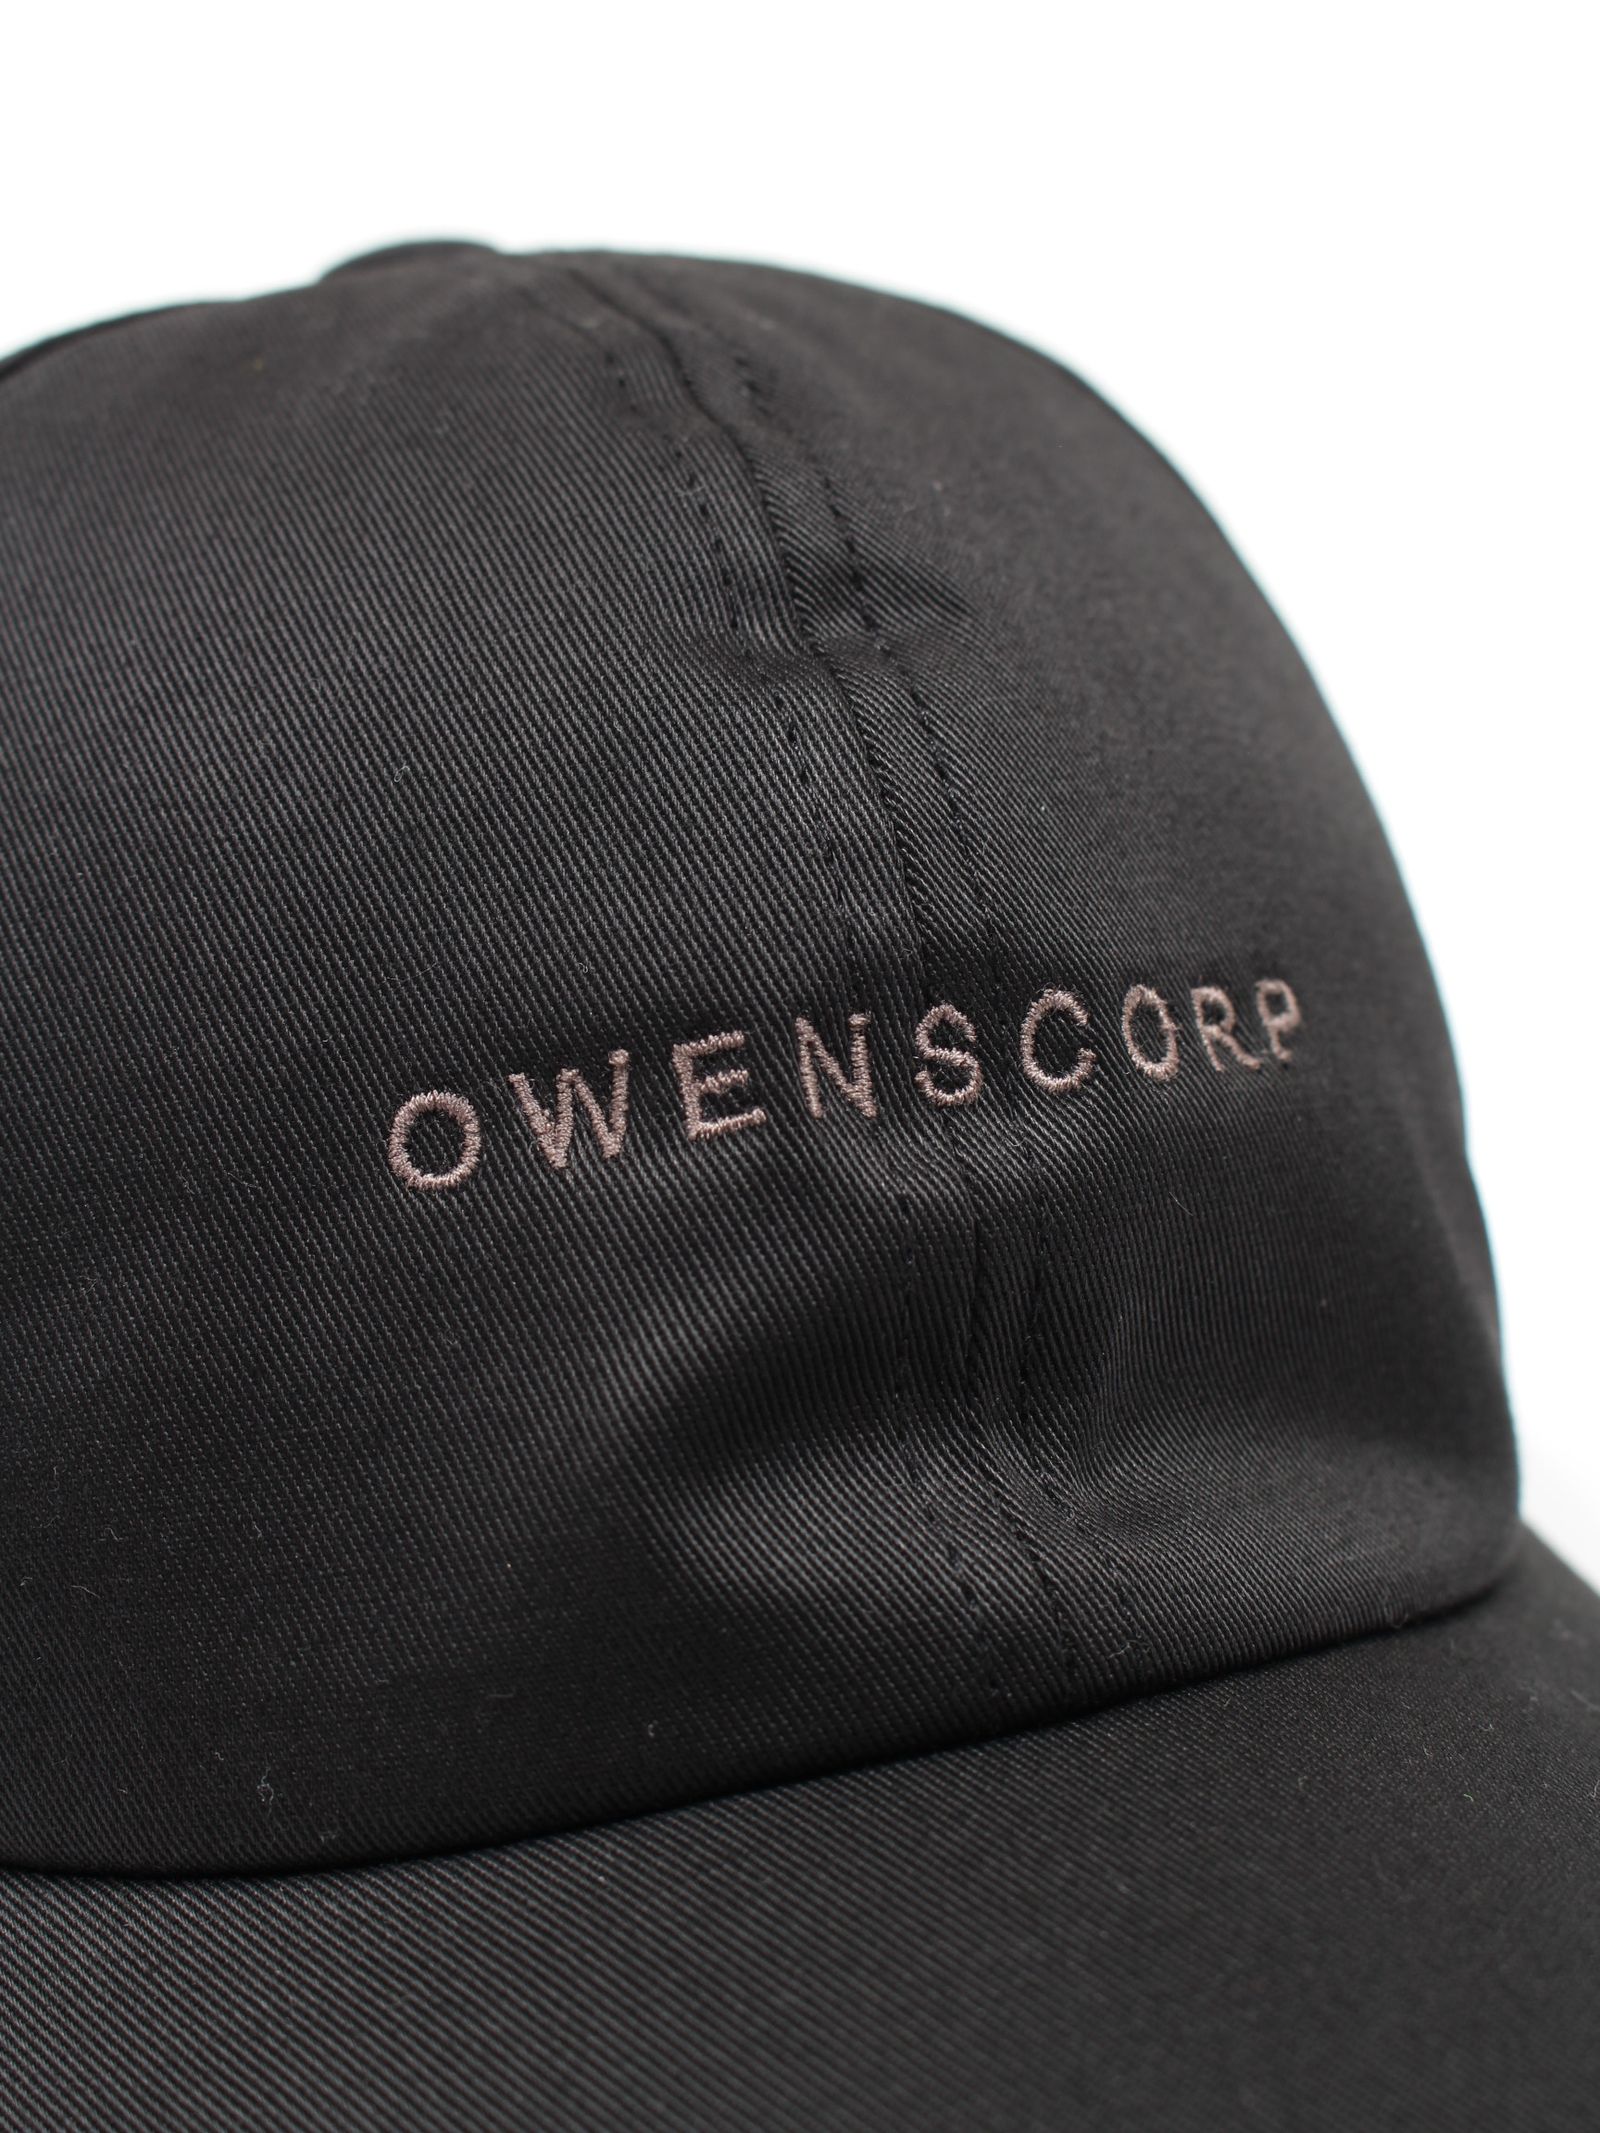 Rick Owens OWENSCORP ベースボールキャップ M cap 帽子 - メンズ